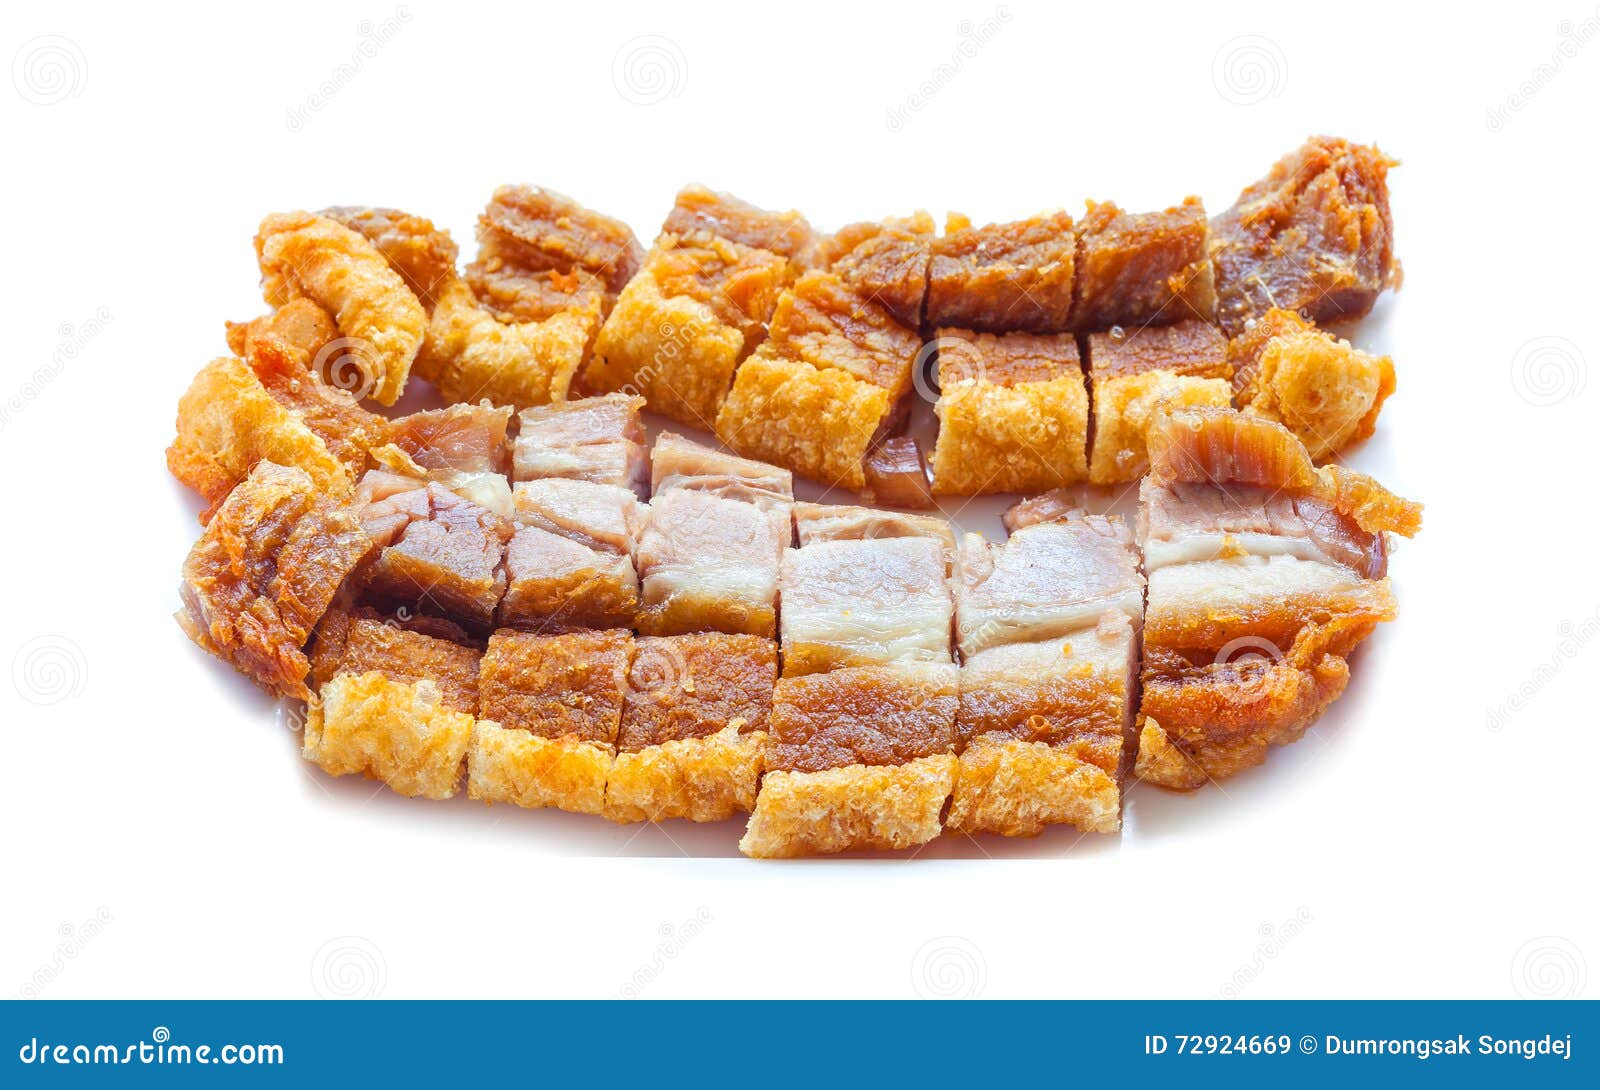 crispy pork slice  on white background